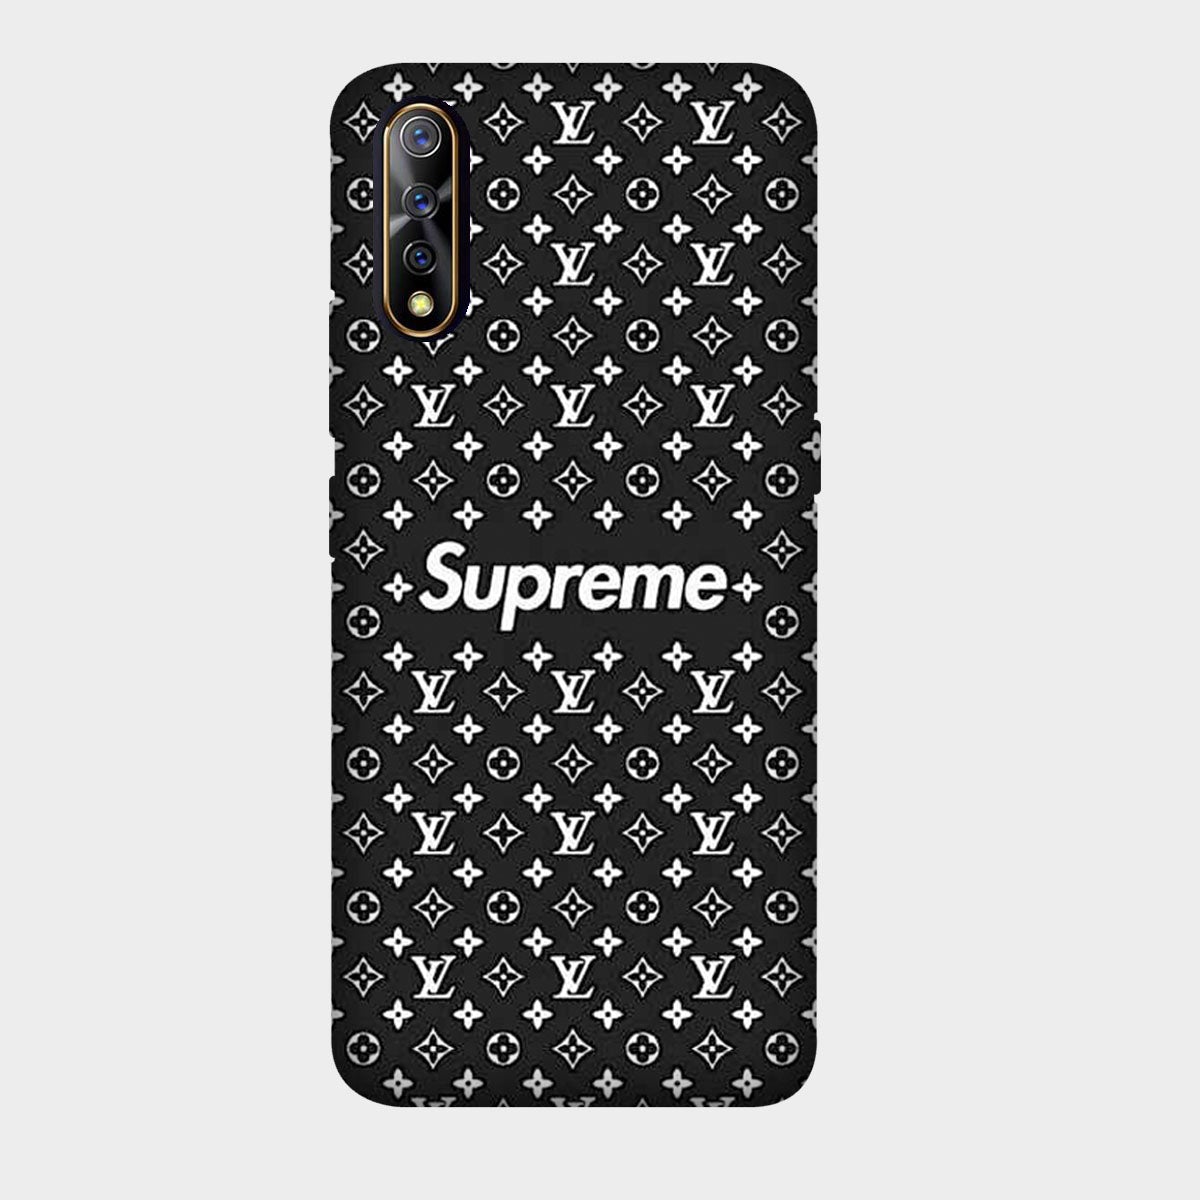 Supreme - Mobile Phone Cover - Hard Case - Vivo